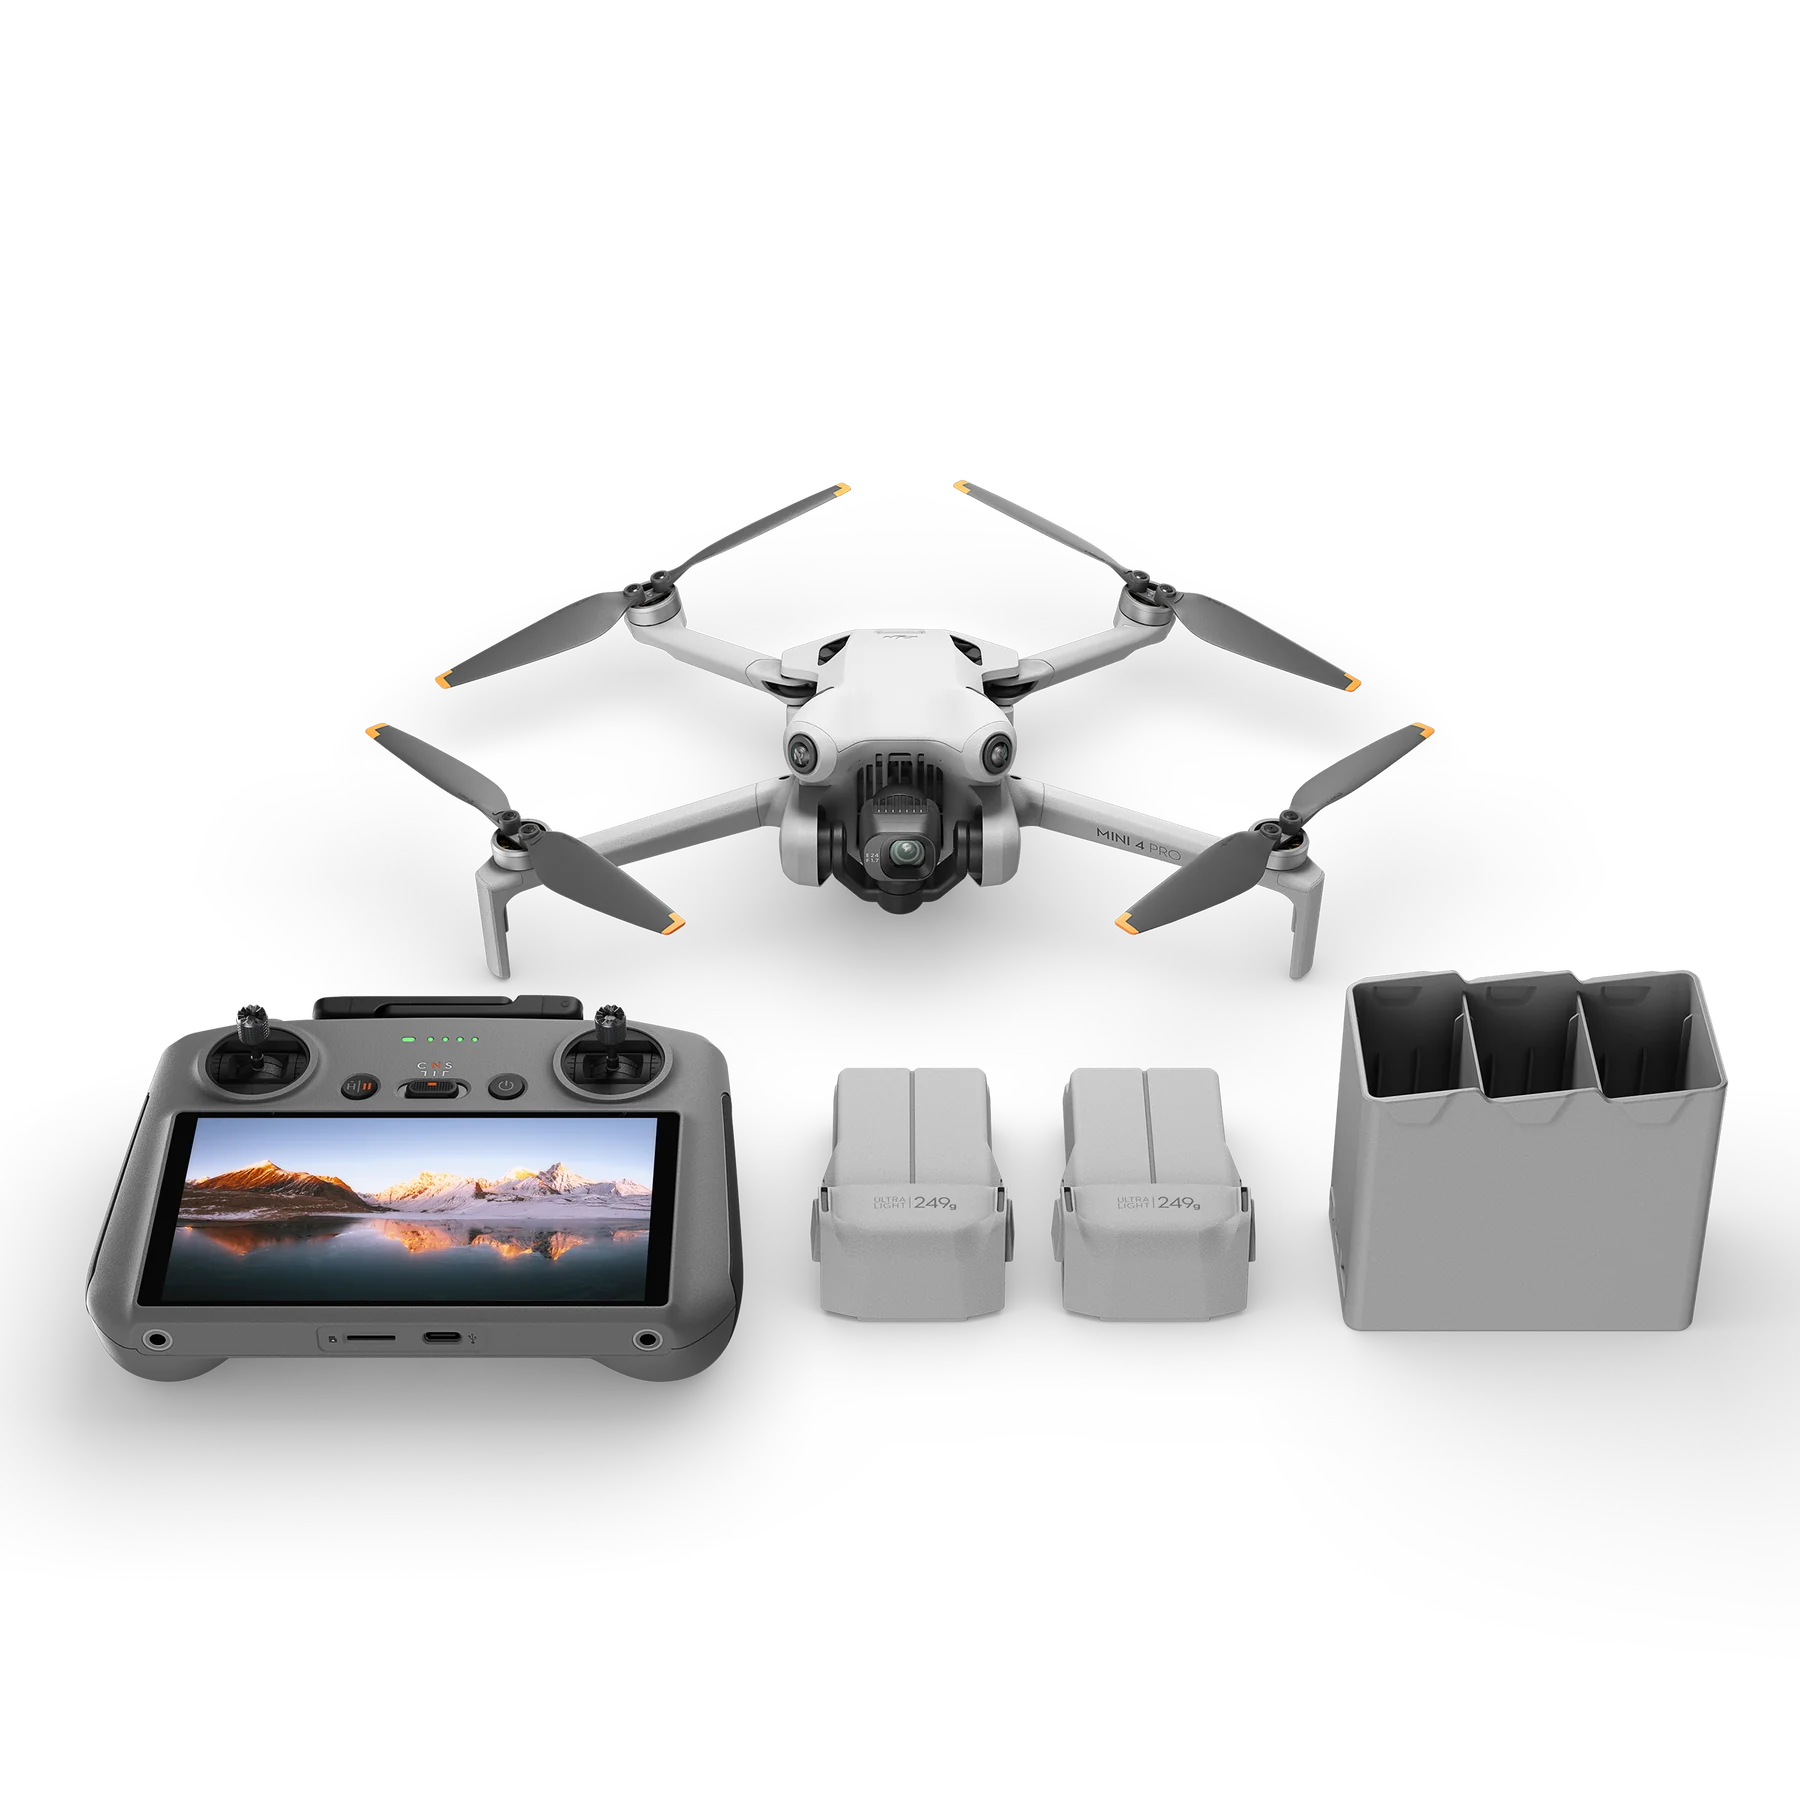 New DJI Mini 4 Pro Drone Offers Obstacle Sensing & Longer Battery Life